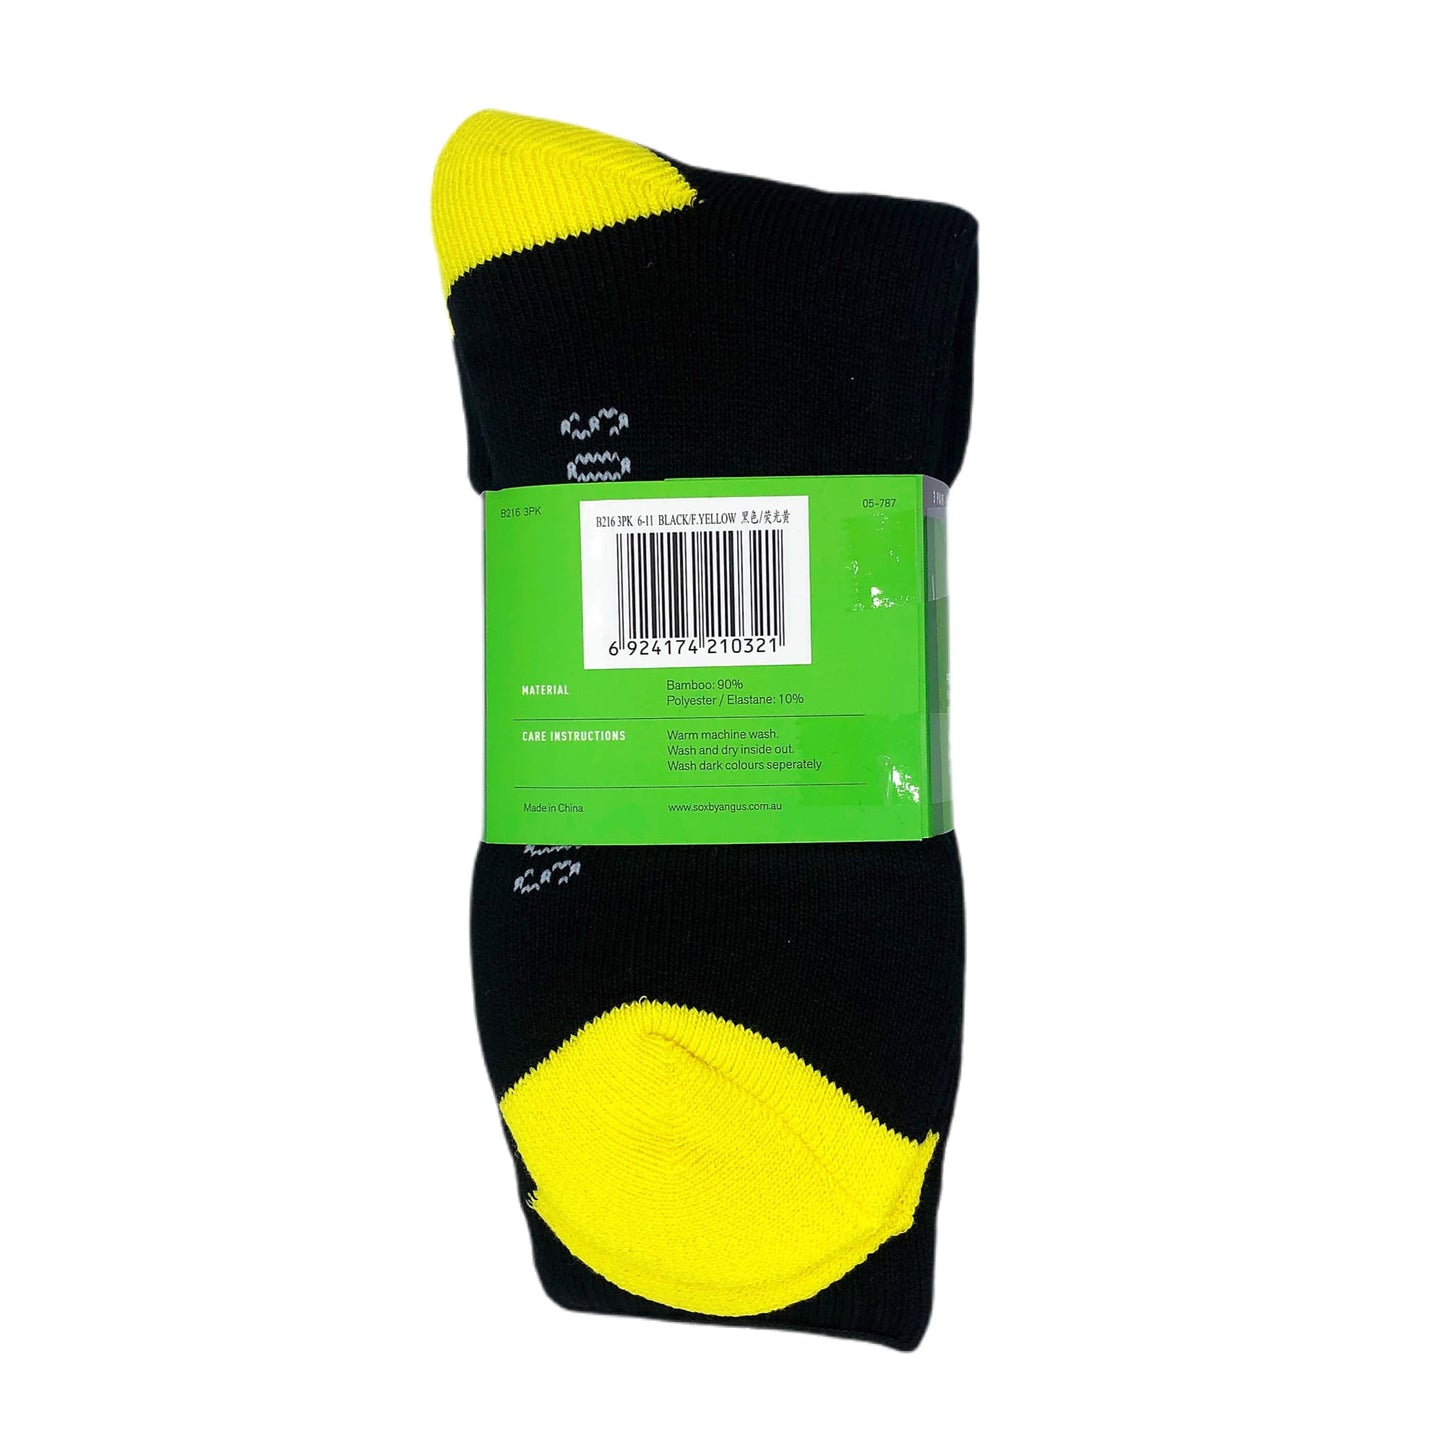 Bamboo Heavy Duty Socks - 3 Pairs Pack - Black/Yellow